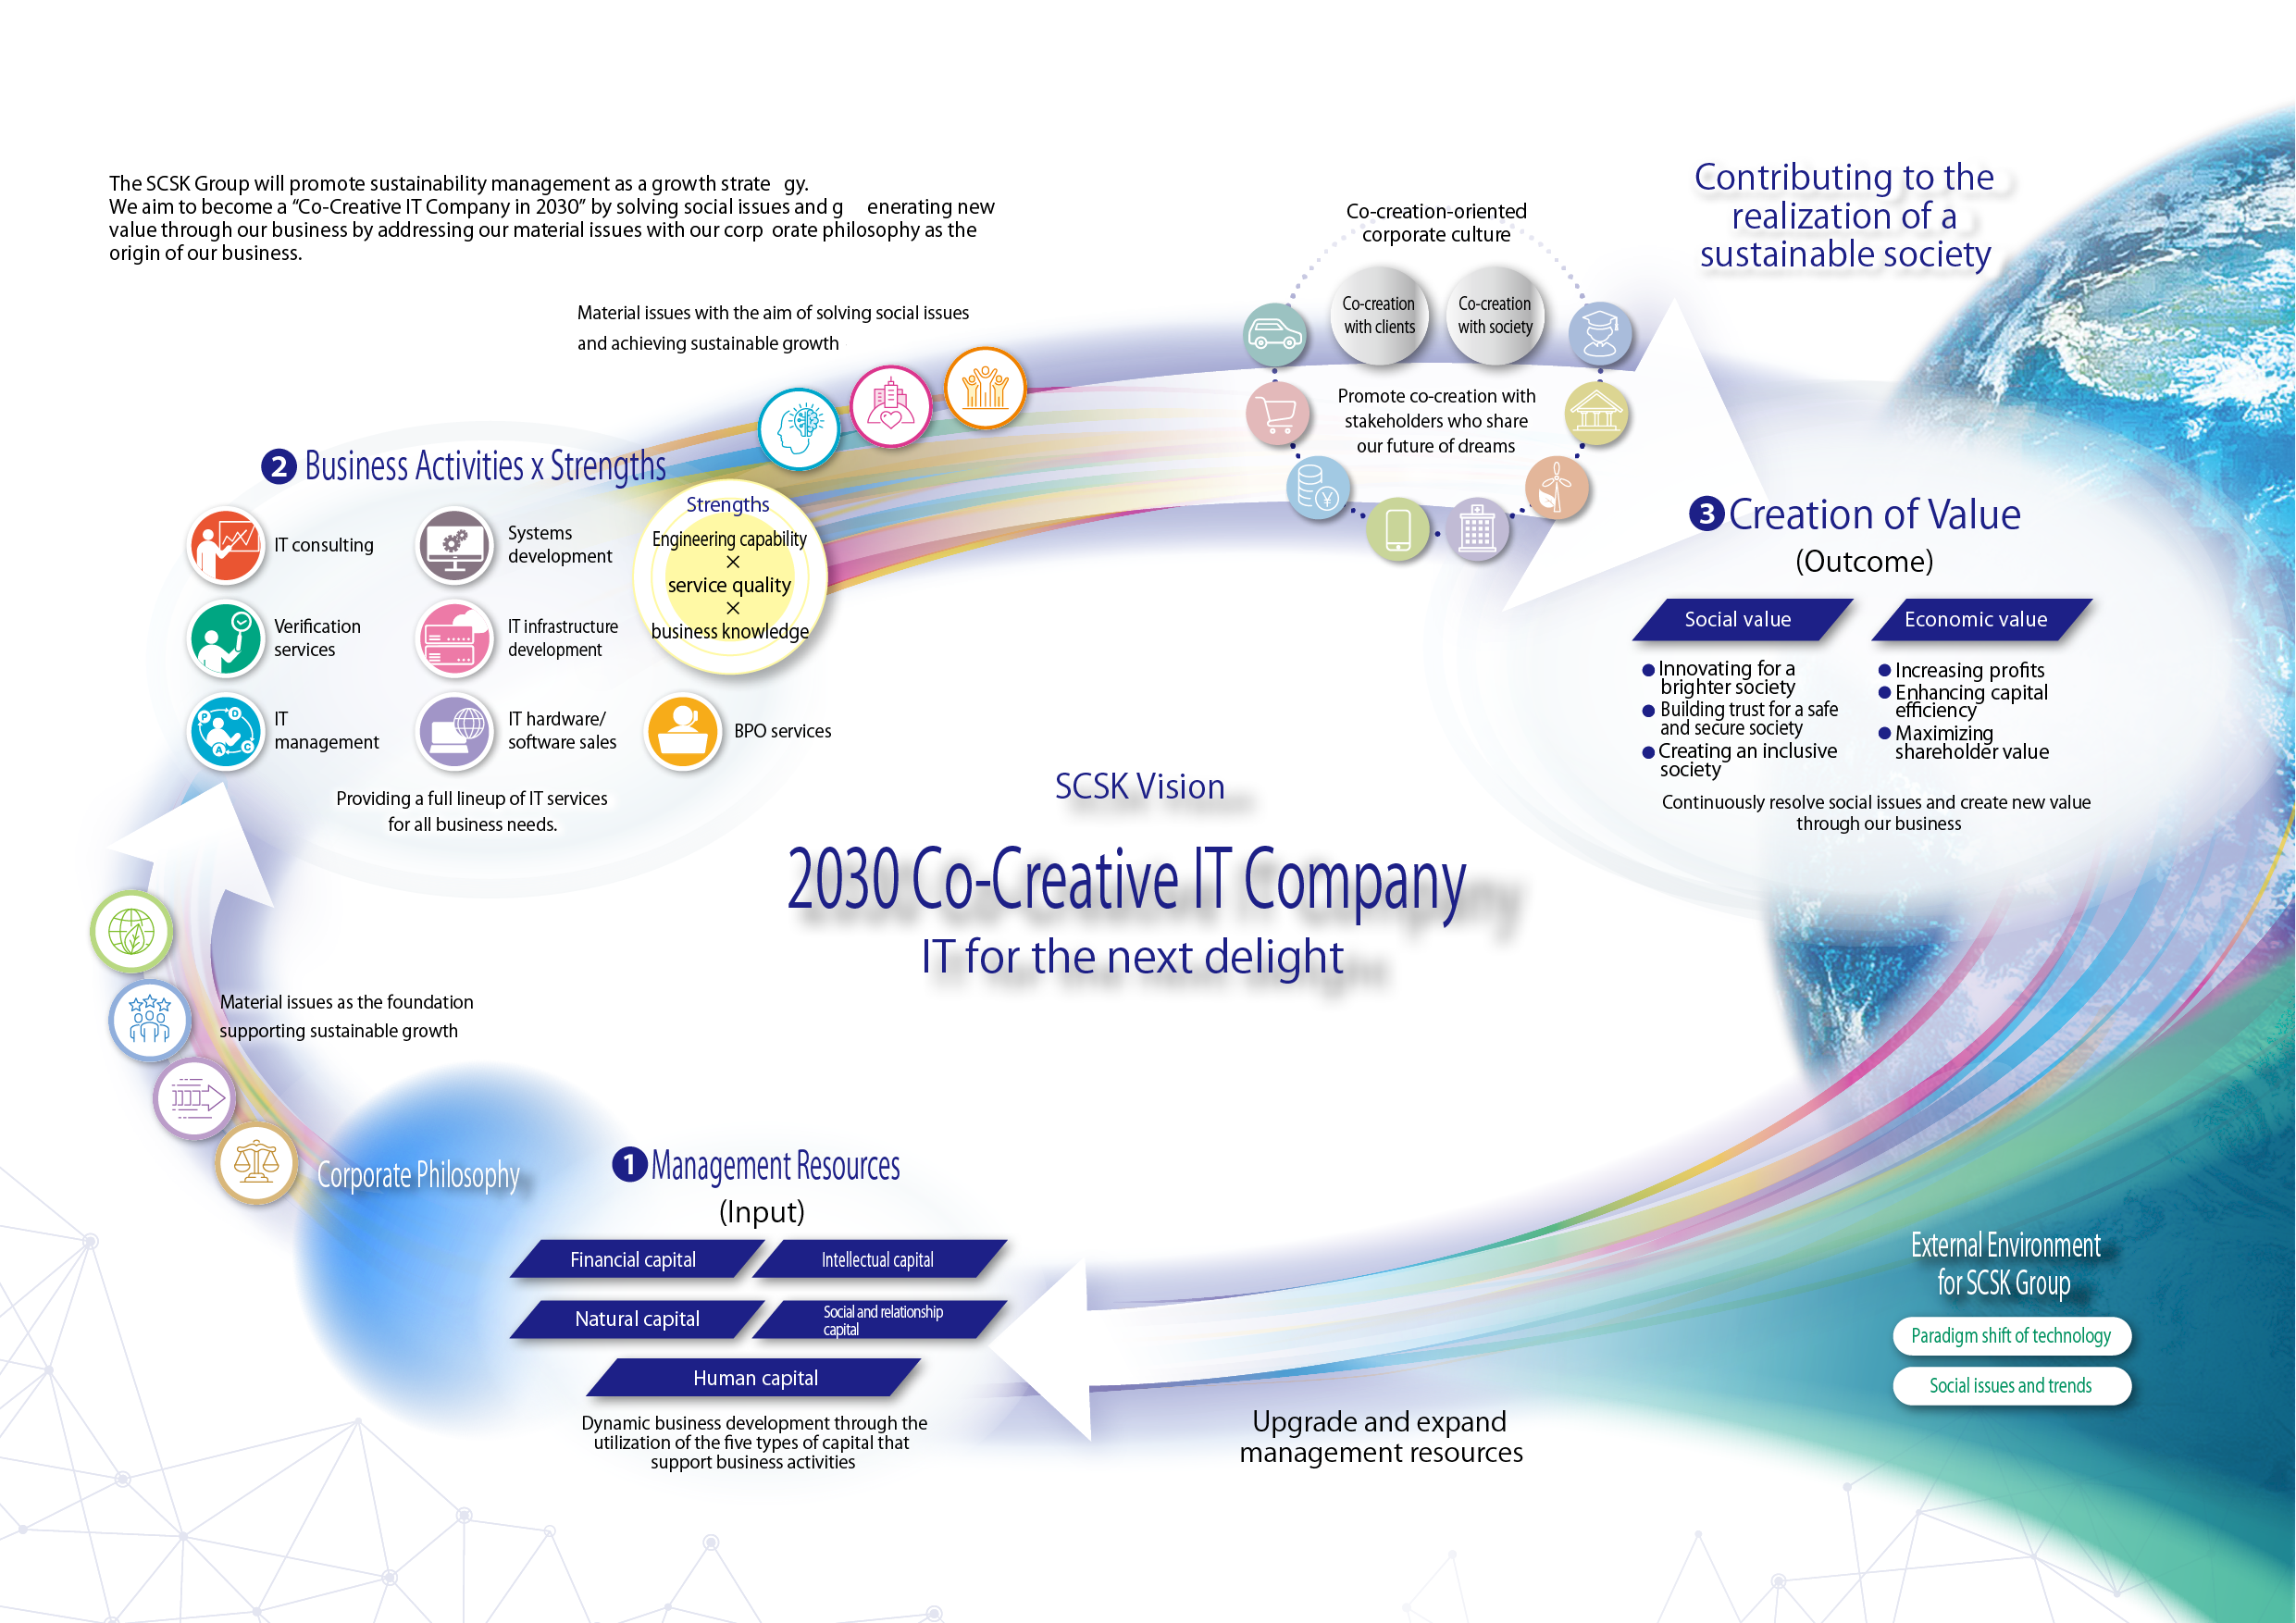 SCSK Group's Value Creation Process